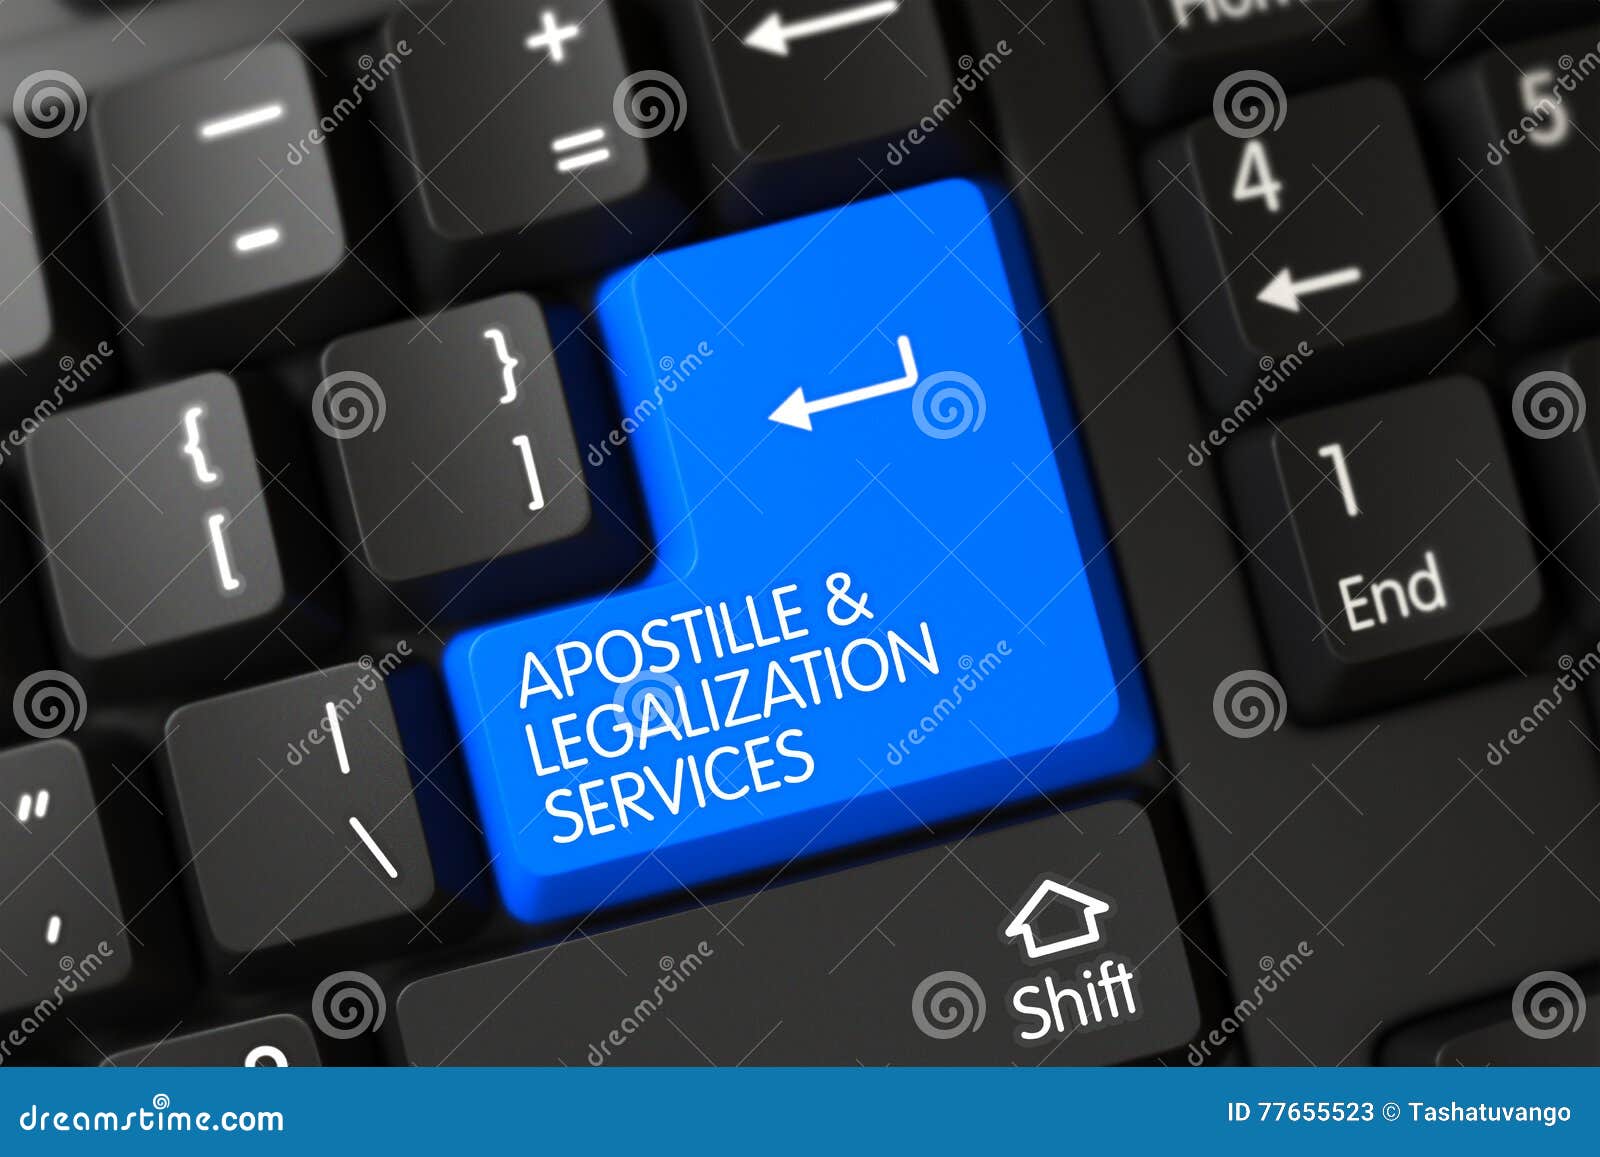 apostille and legalization services - modern laptop button. 3d.